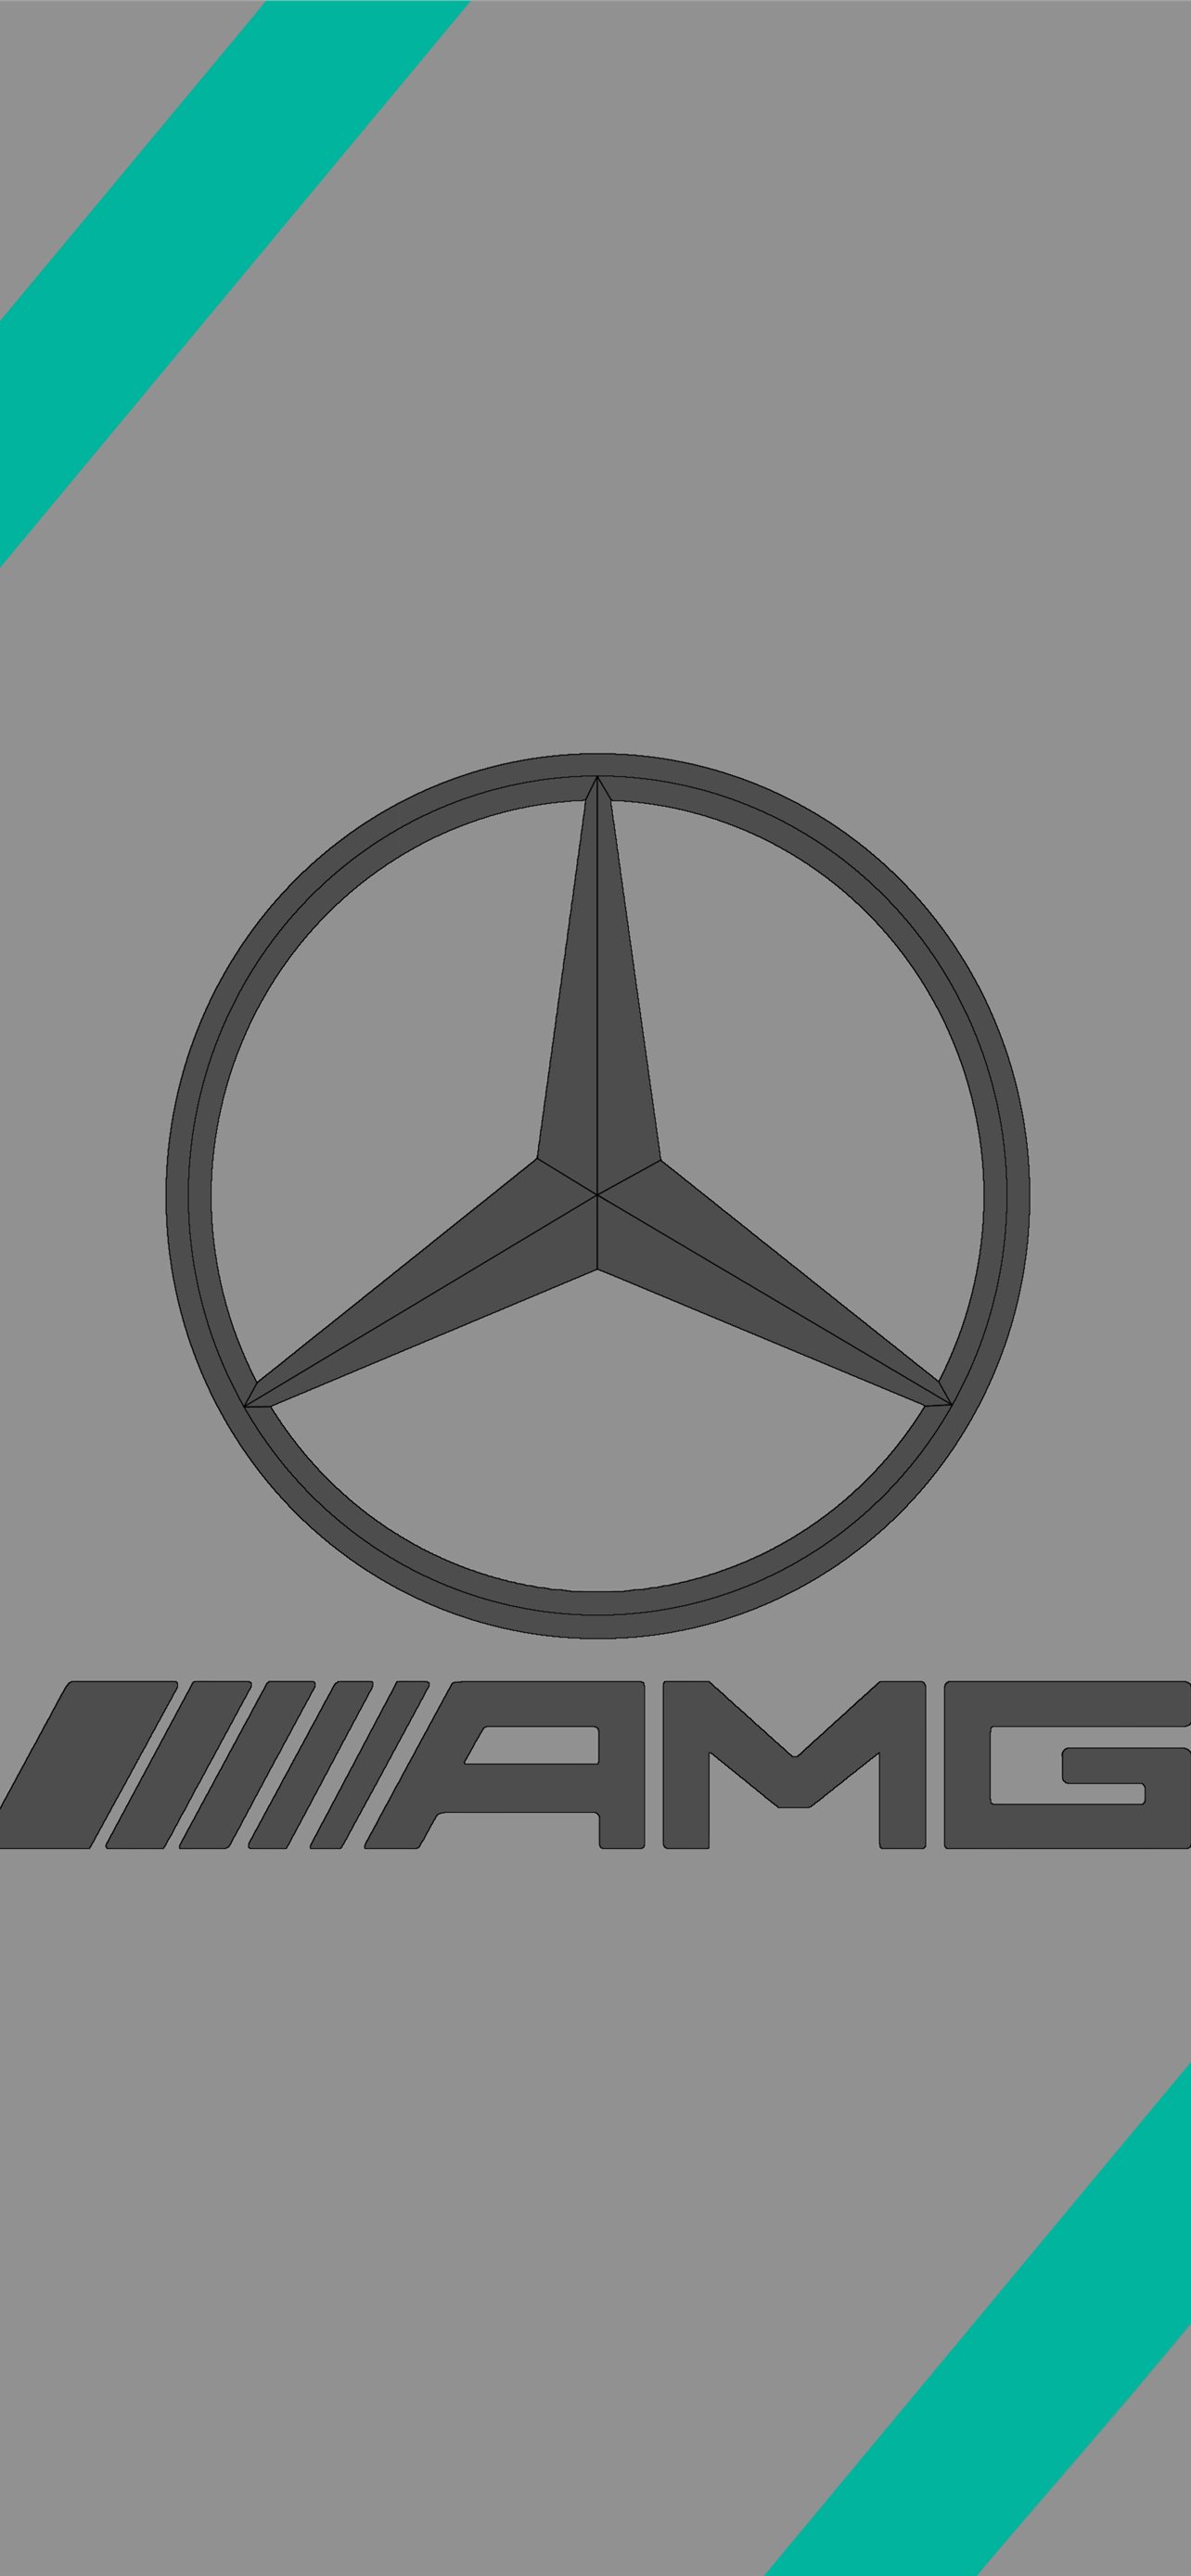 Best Mercedes benz logo iPhone HD Wallpapers   iLikeWallpaper